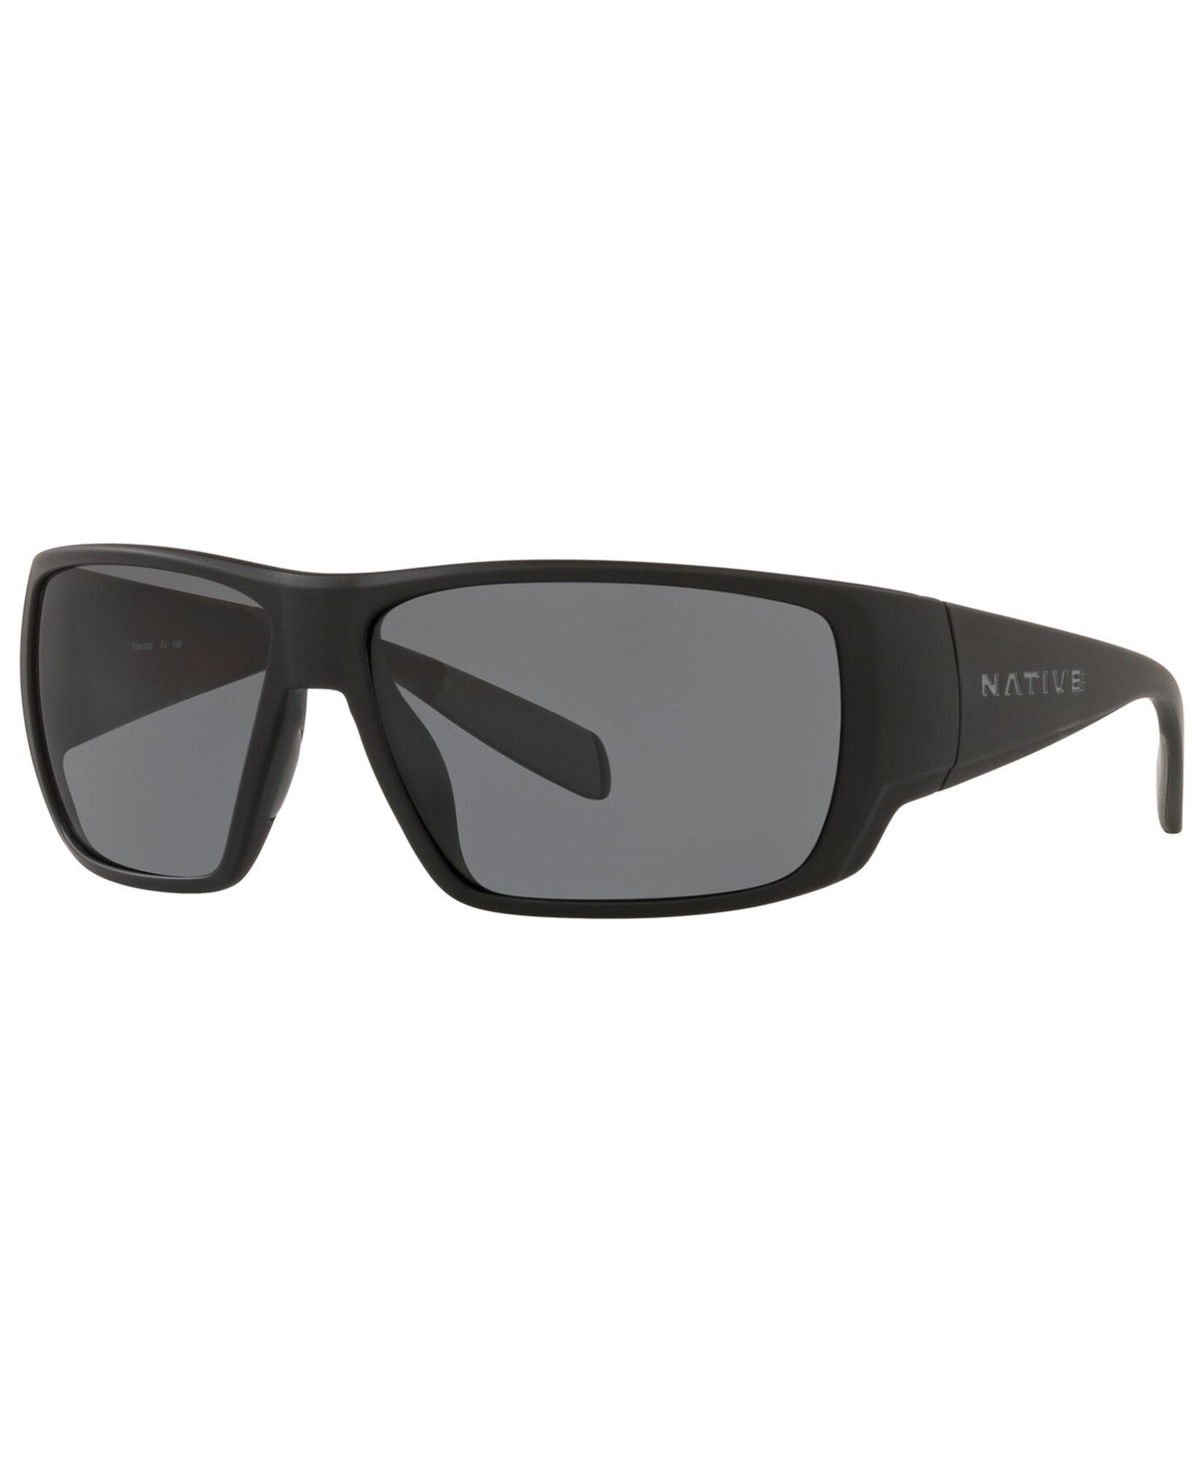 Native Men's Polarized Sunglasses, XD0061 64 - MATTE BLACK /GREY